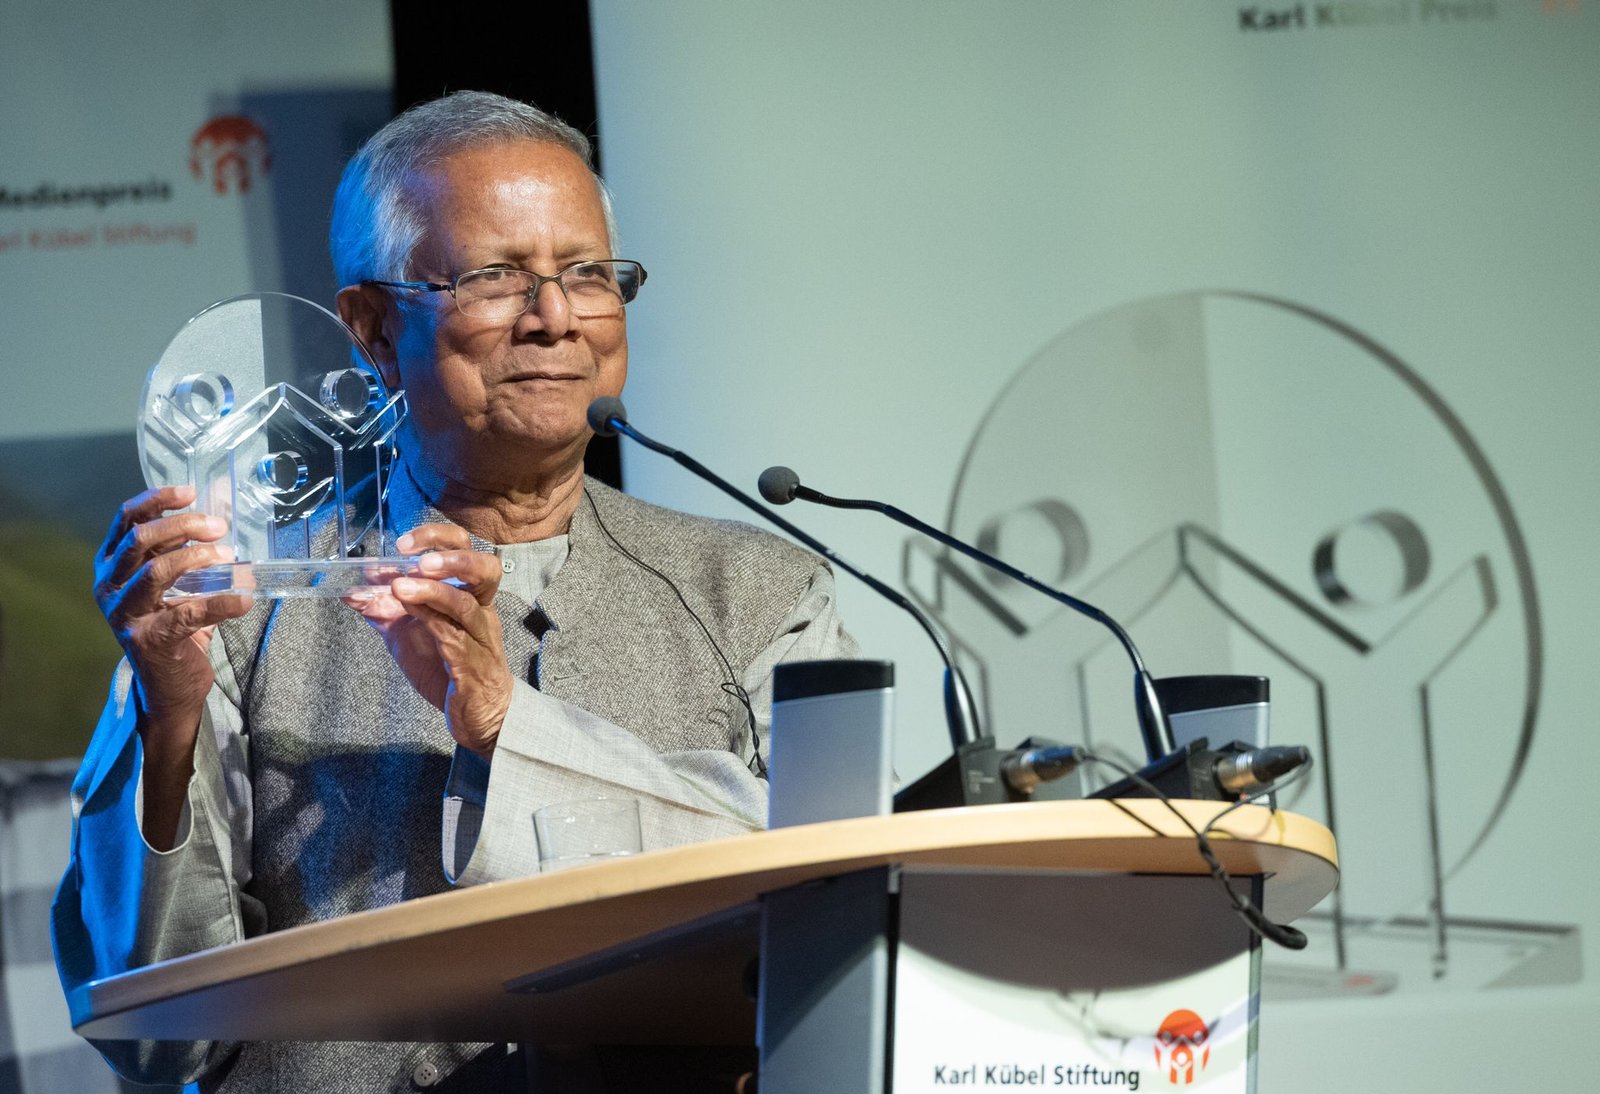 Karl Kübel Prize of Germany awarded to Nobel Laureate Professor Muhammad Yunus